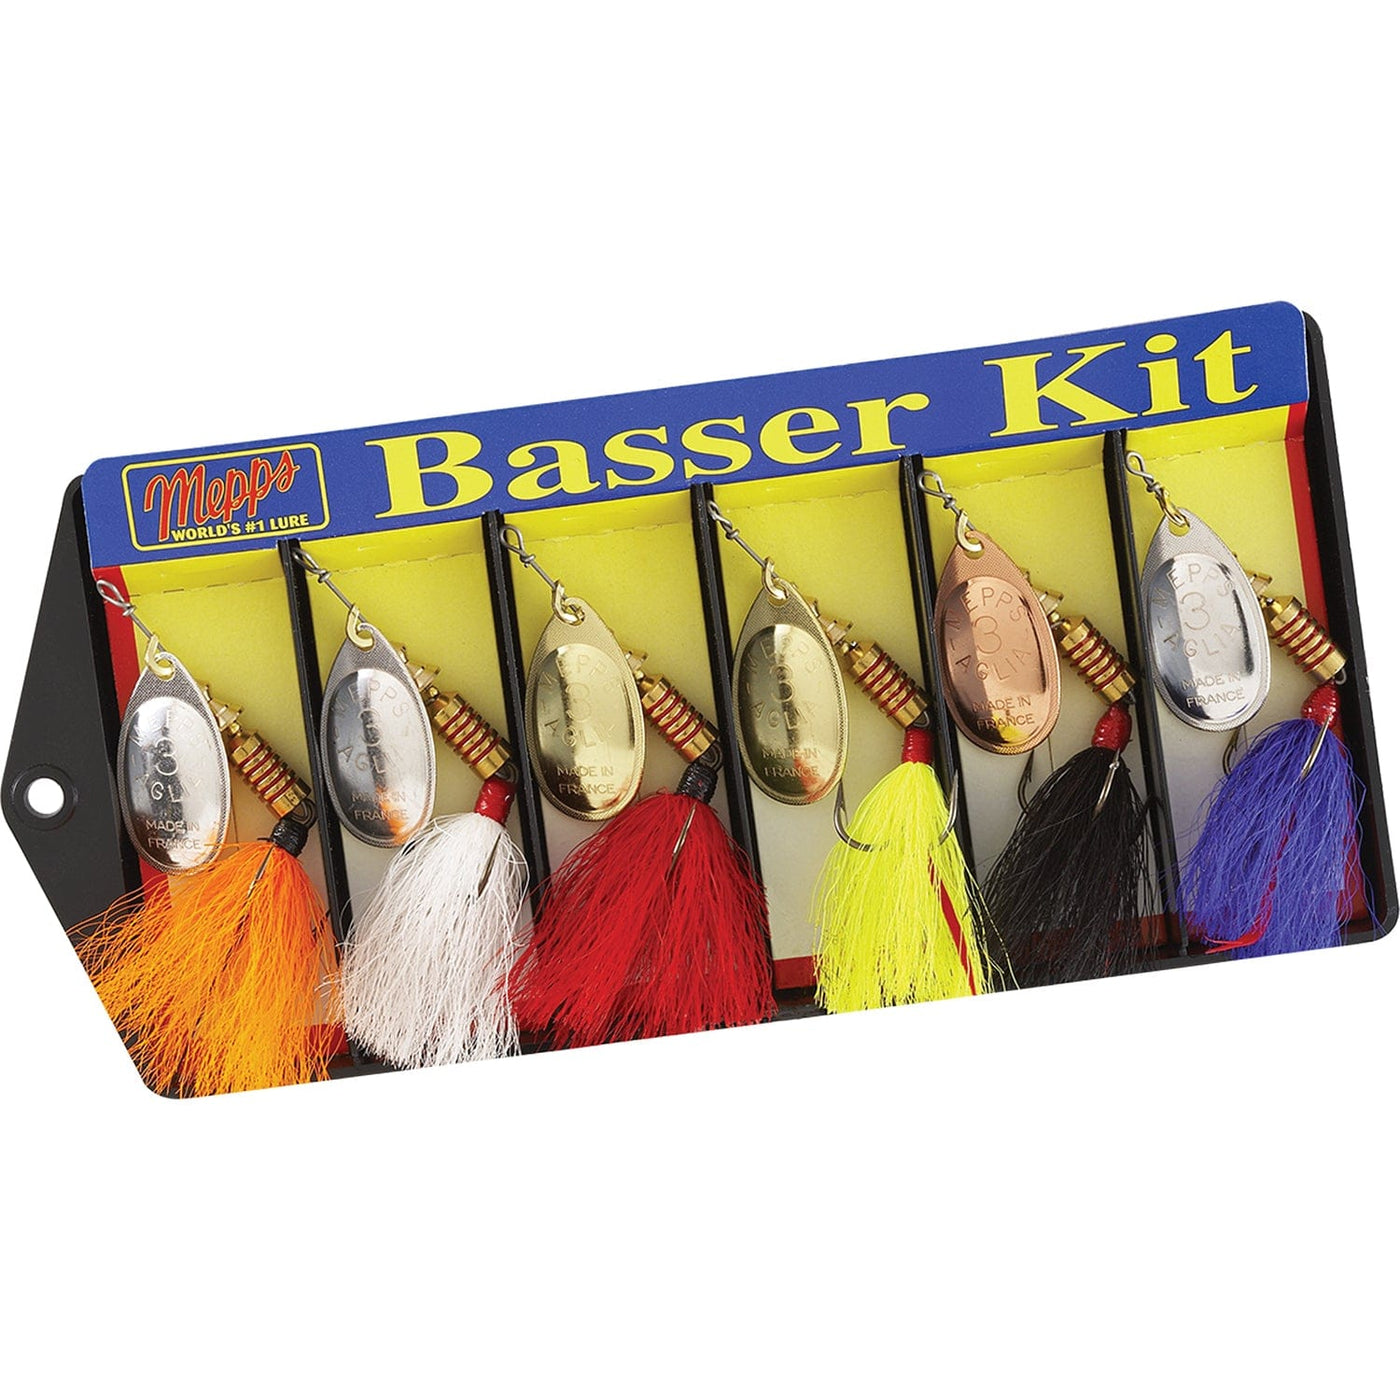 Mepps Mepps Basser Kit - Dressed  3 Aglia Assortment Fishing